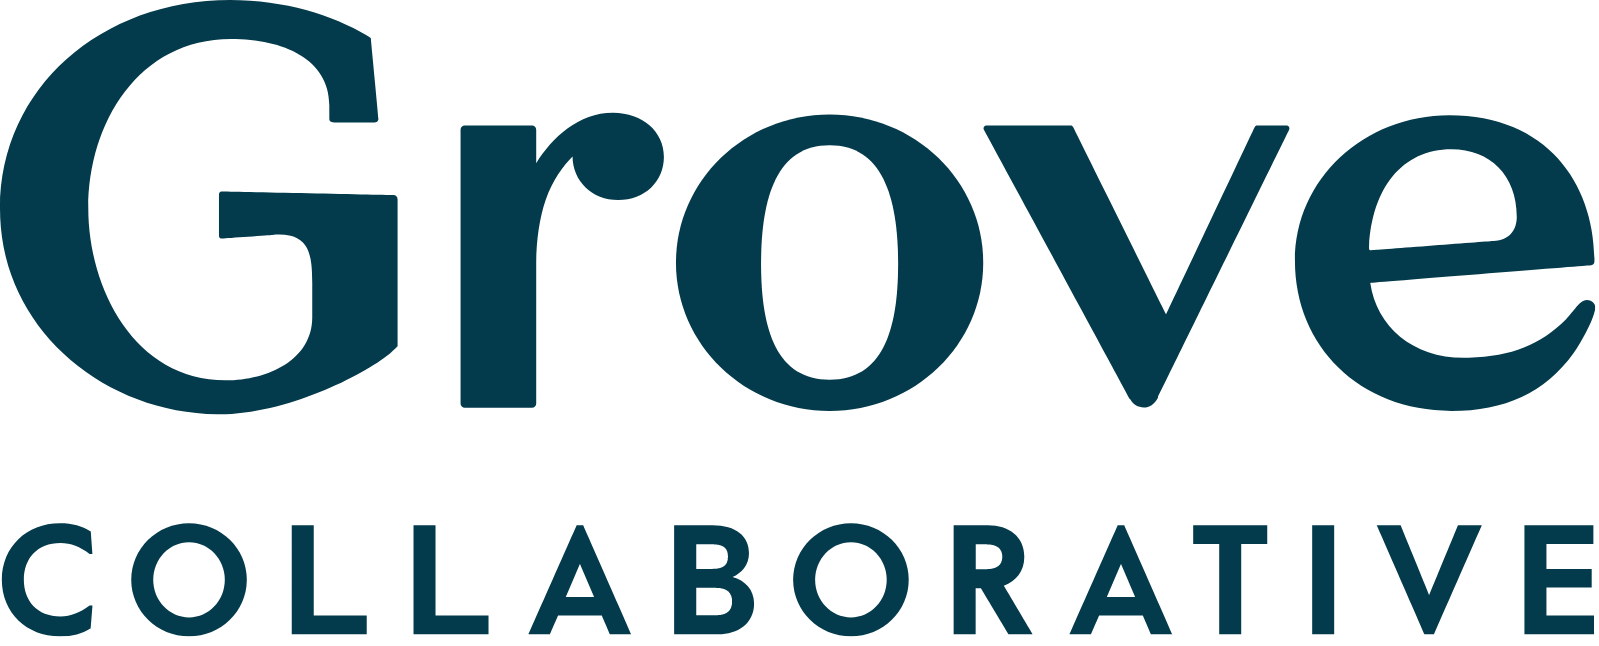 Grove Collaborative logo large (transparent PNG)